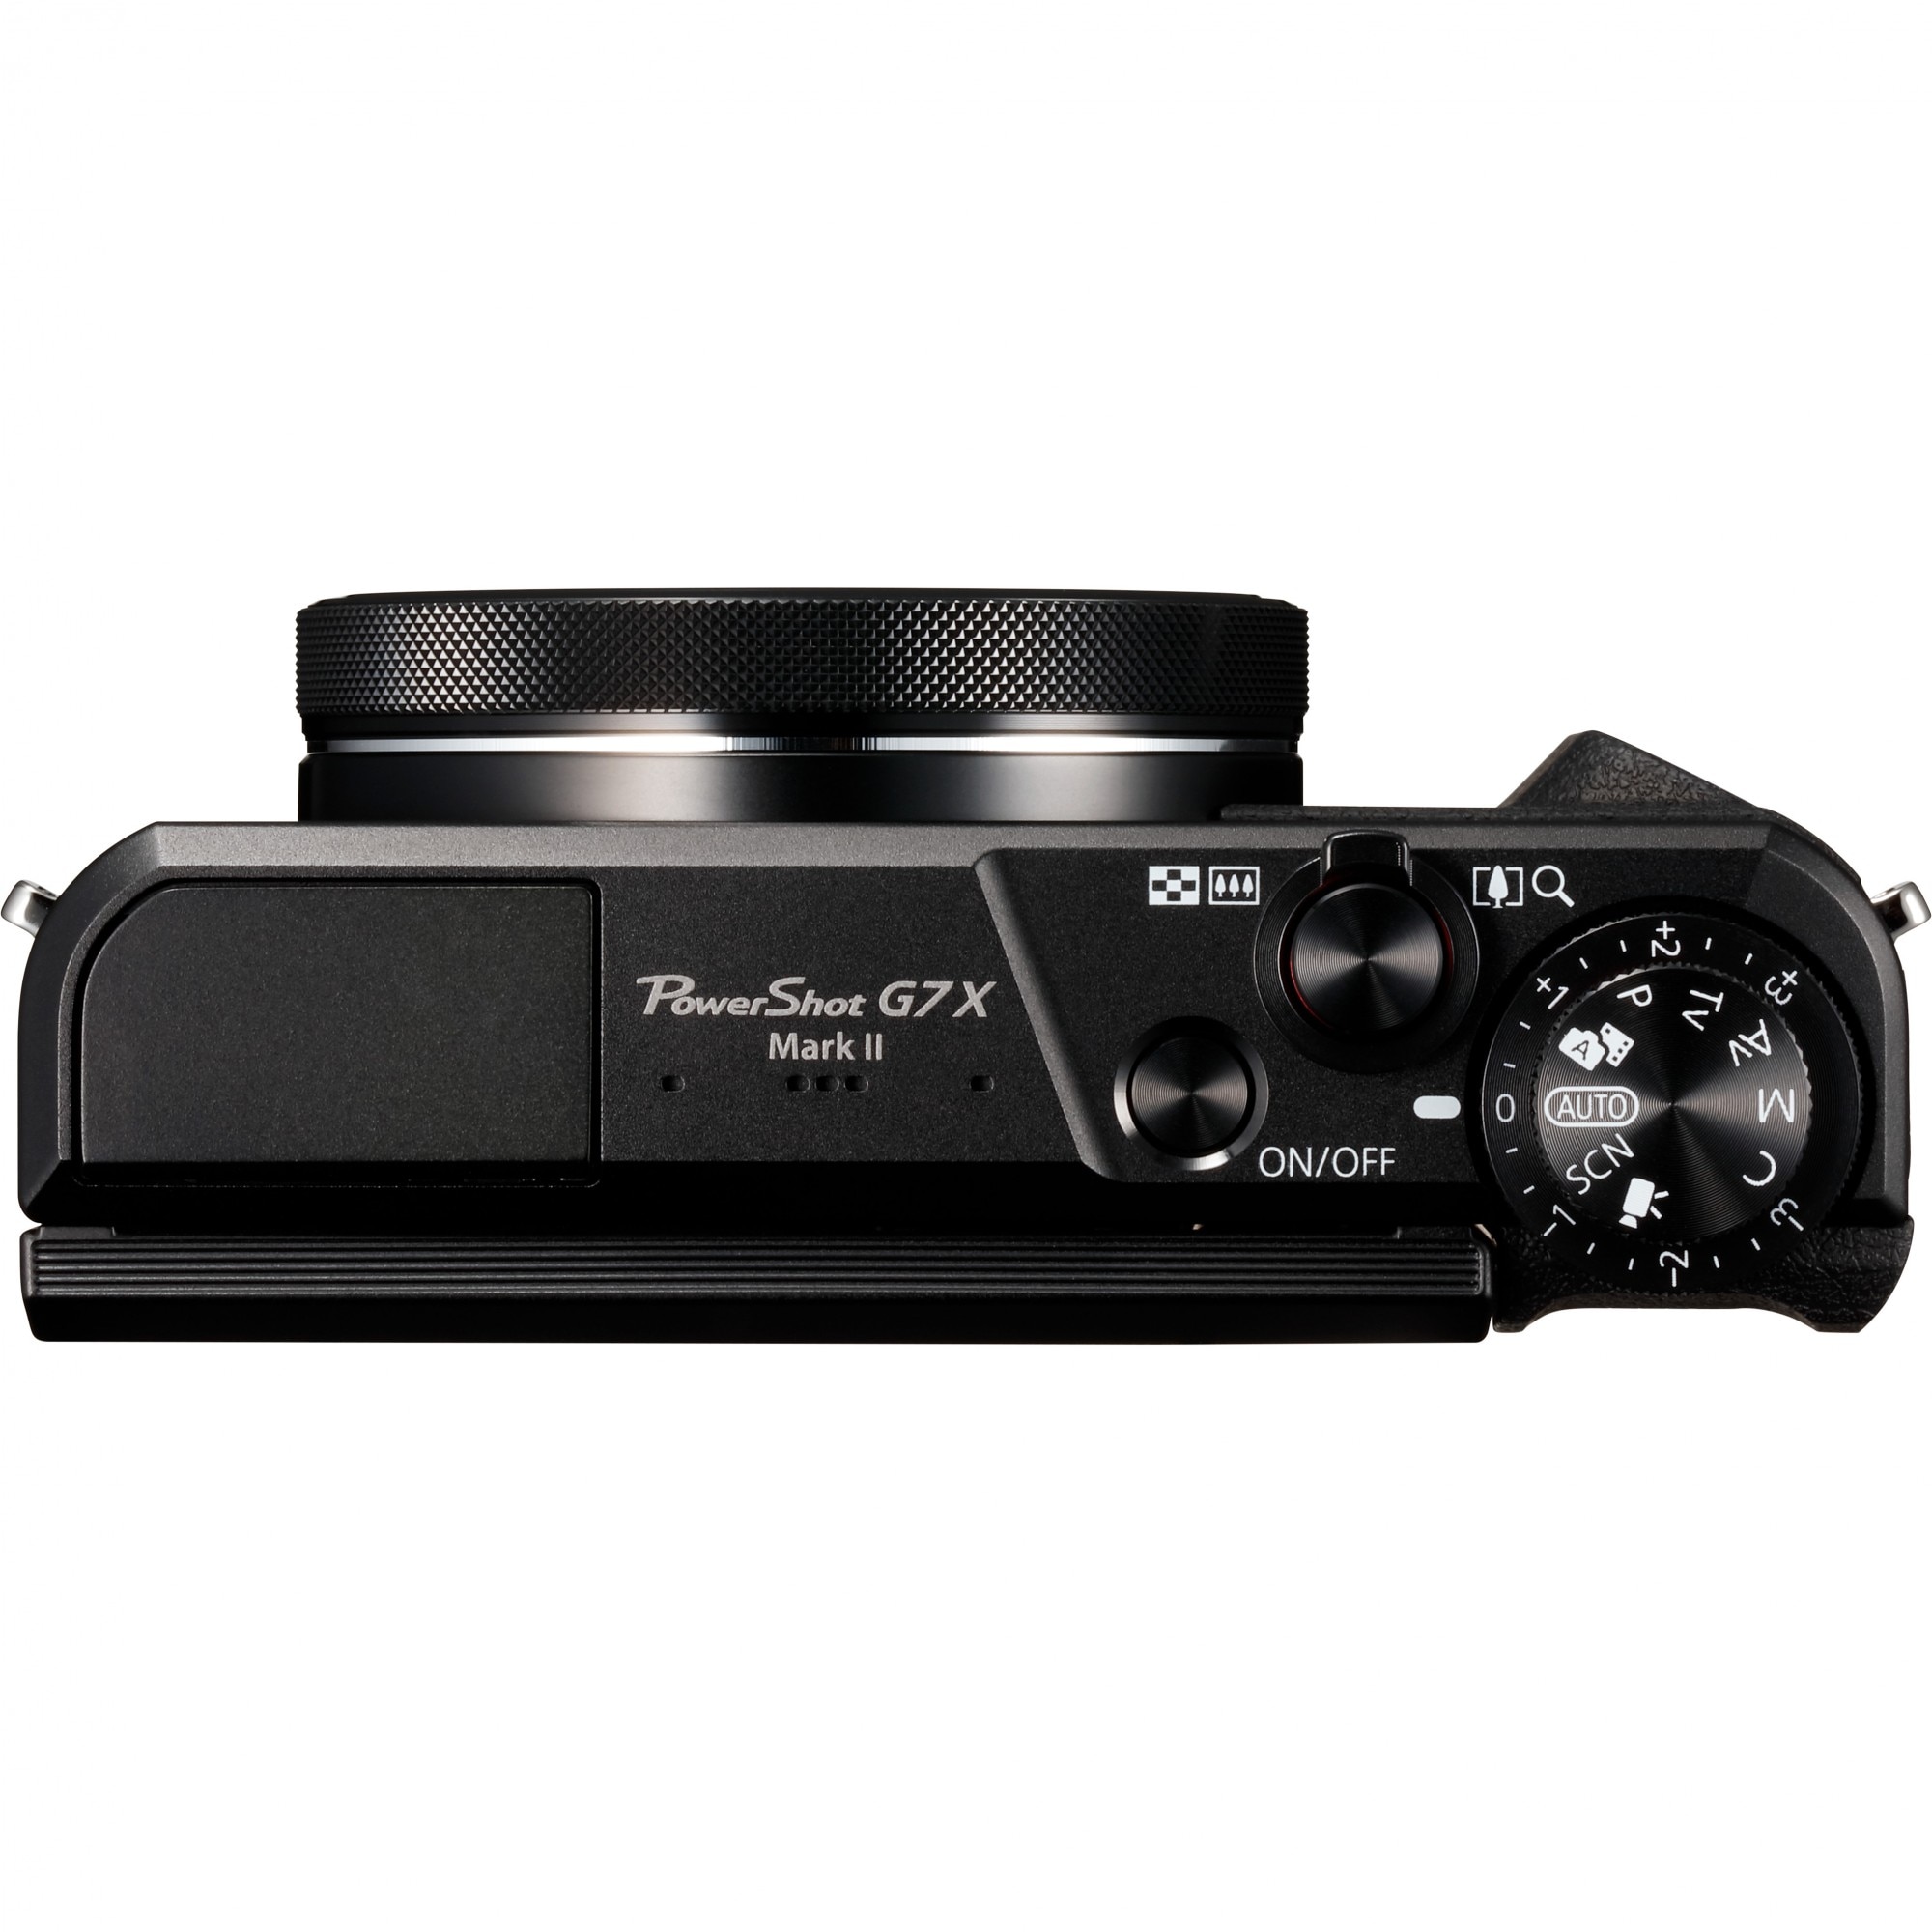 Contract trough agenda Canon PowerShot G7 X Mark II, Aparat foto digital 20.1MP, Black - eMAG.ro